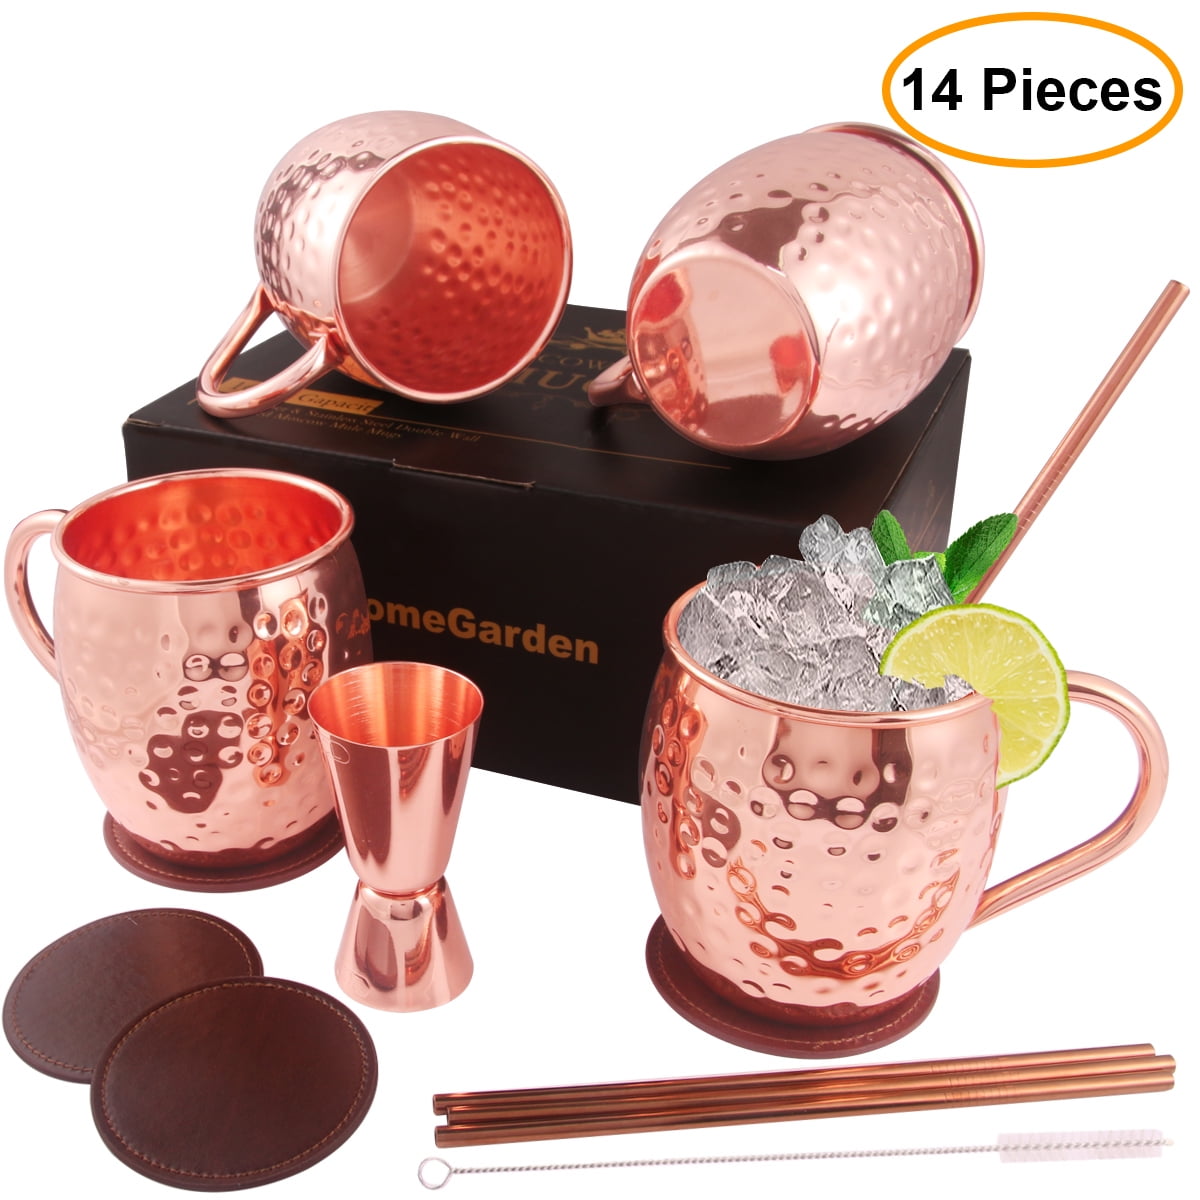 4 Pcs 100% Pure Coper Hand Hammered Copper Moscow Mule Mugs /Cups Copper Mug 01